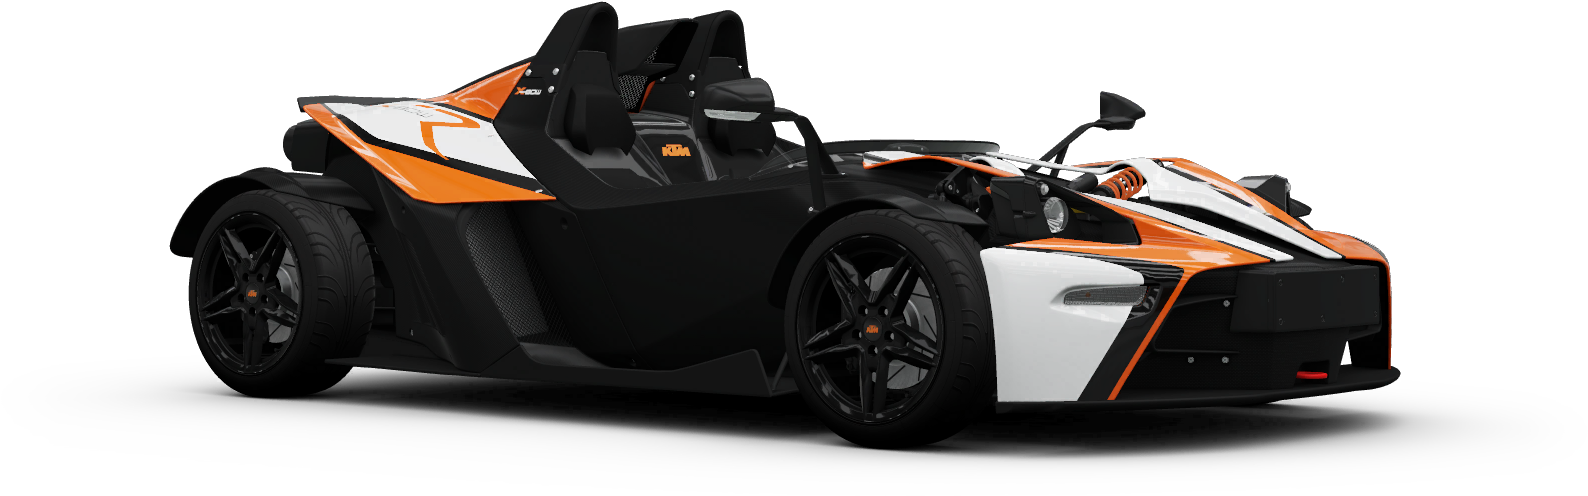 A Black And Orange Race Car